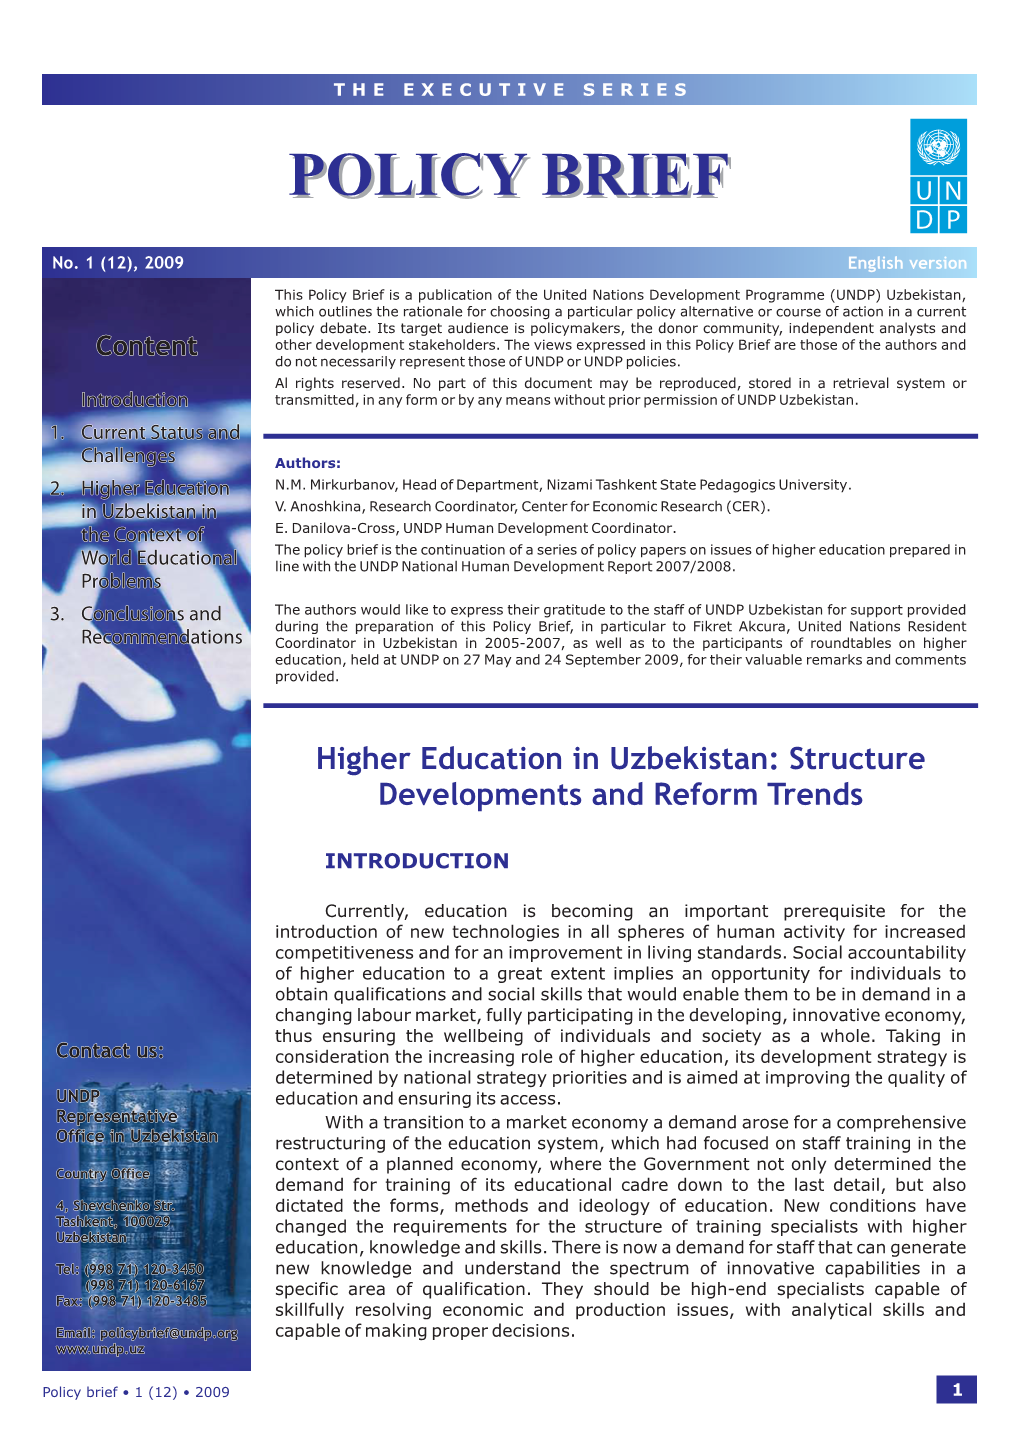 Higher Education in Uzbekistan: Structure Developments and Reform Trends